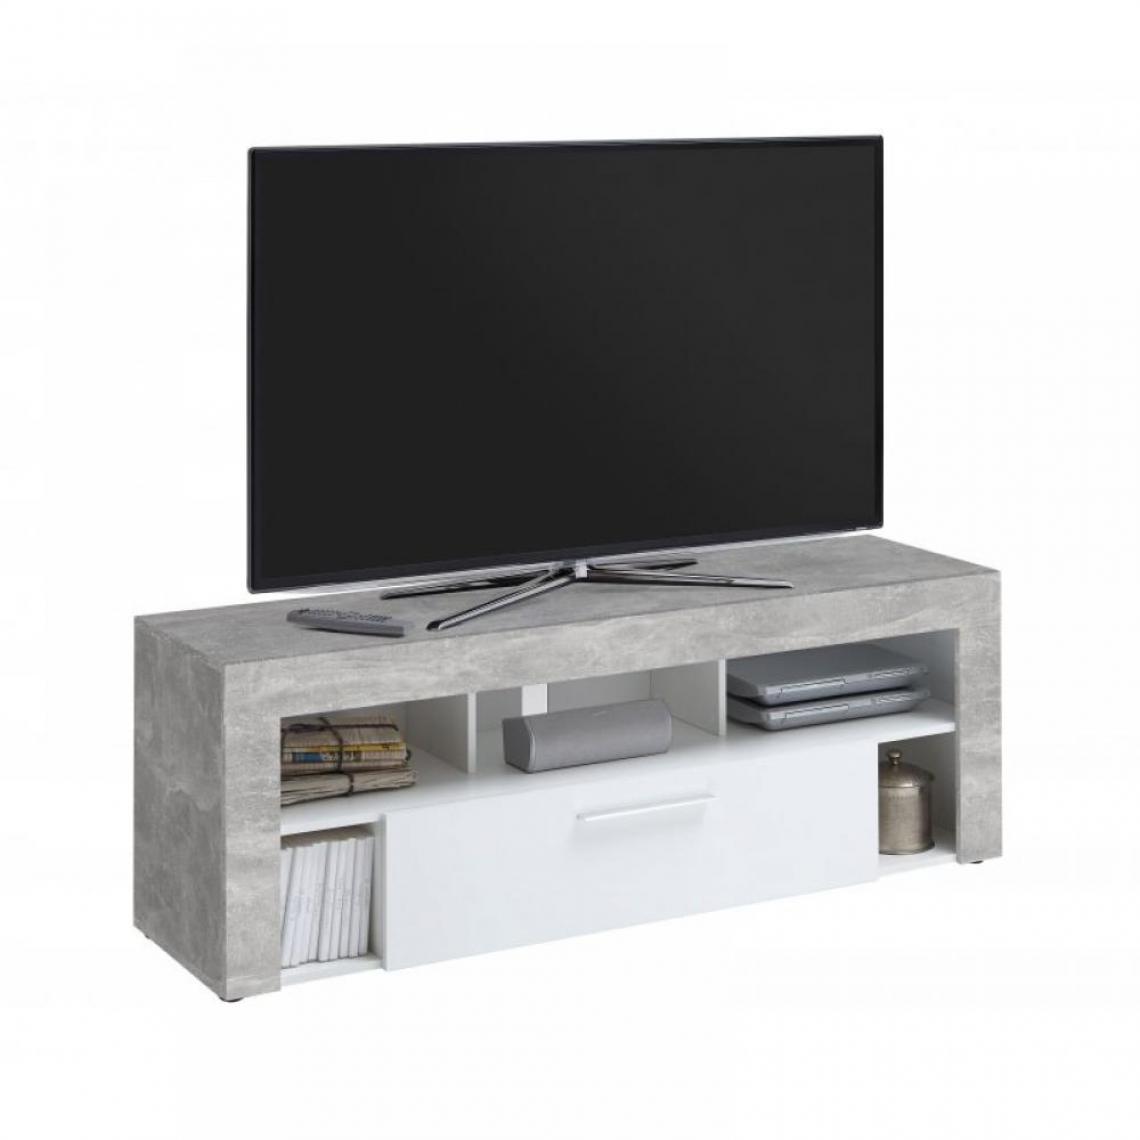 Inside 75 - Meuble TV VALEE gris béton et blanc 1 tiroirs 1 plateau - Meubles TV, Hi-Fi